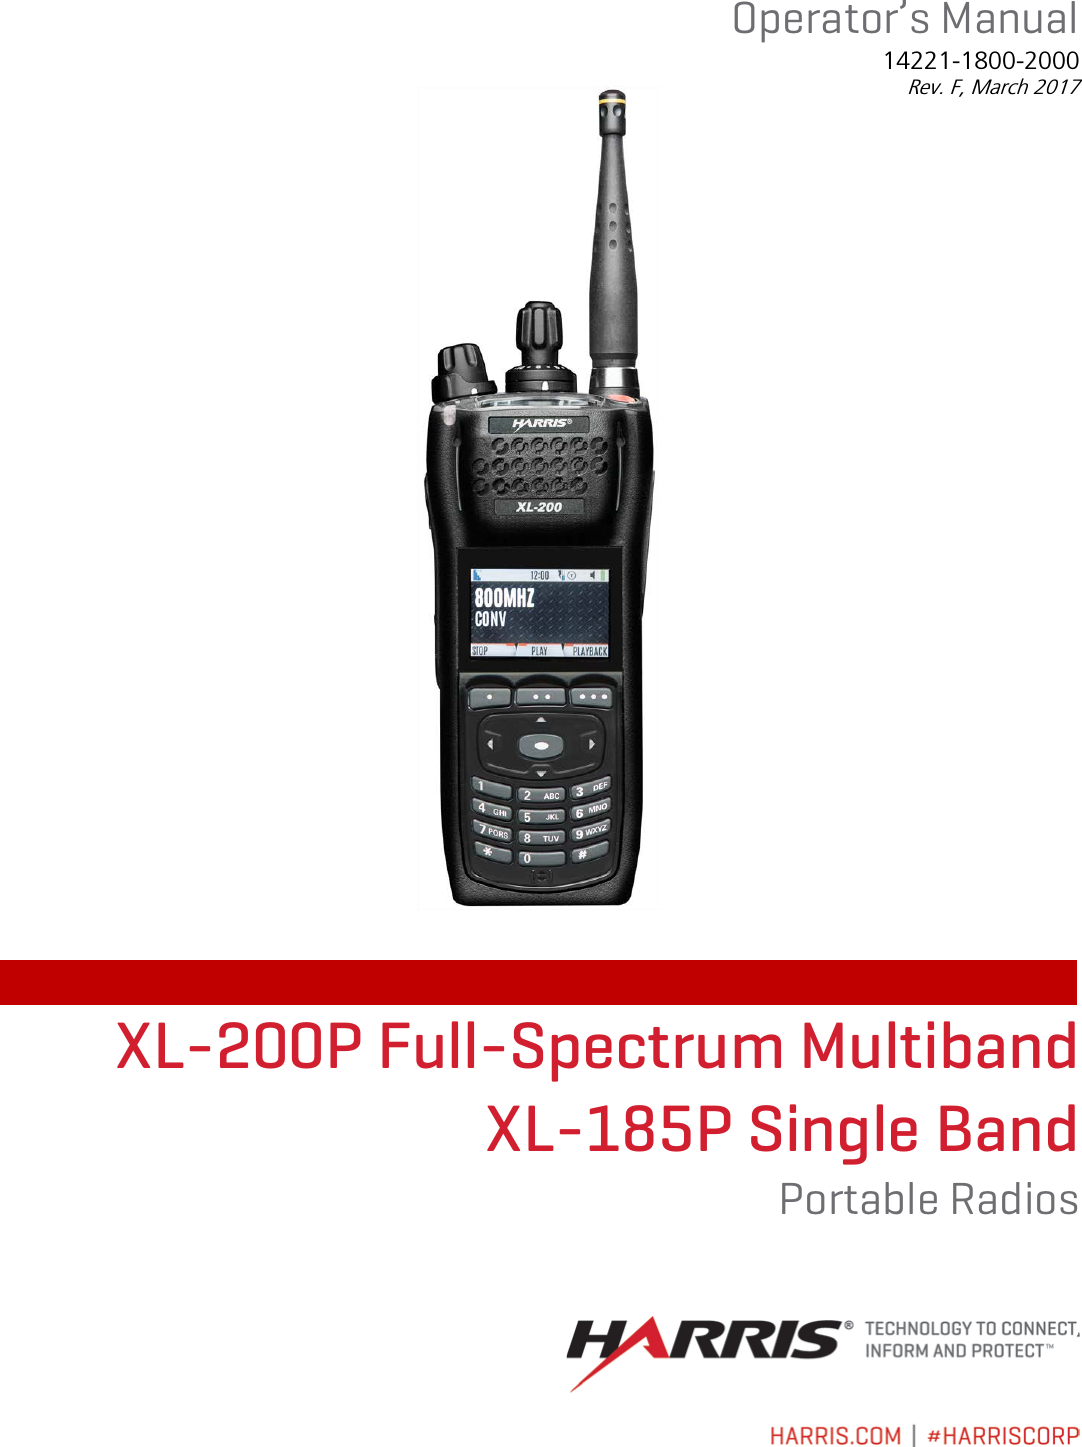 Operator’s Manual 14221-1800-2000 Rev. F, March 2017    XL-200P Full-Spectrum Multiband XL-185P Single Band Portable Radios    